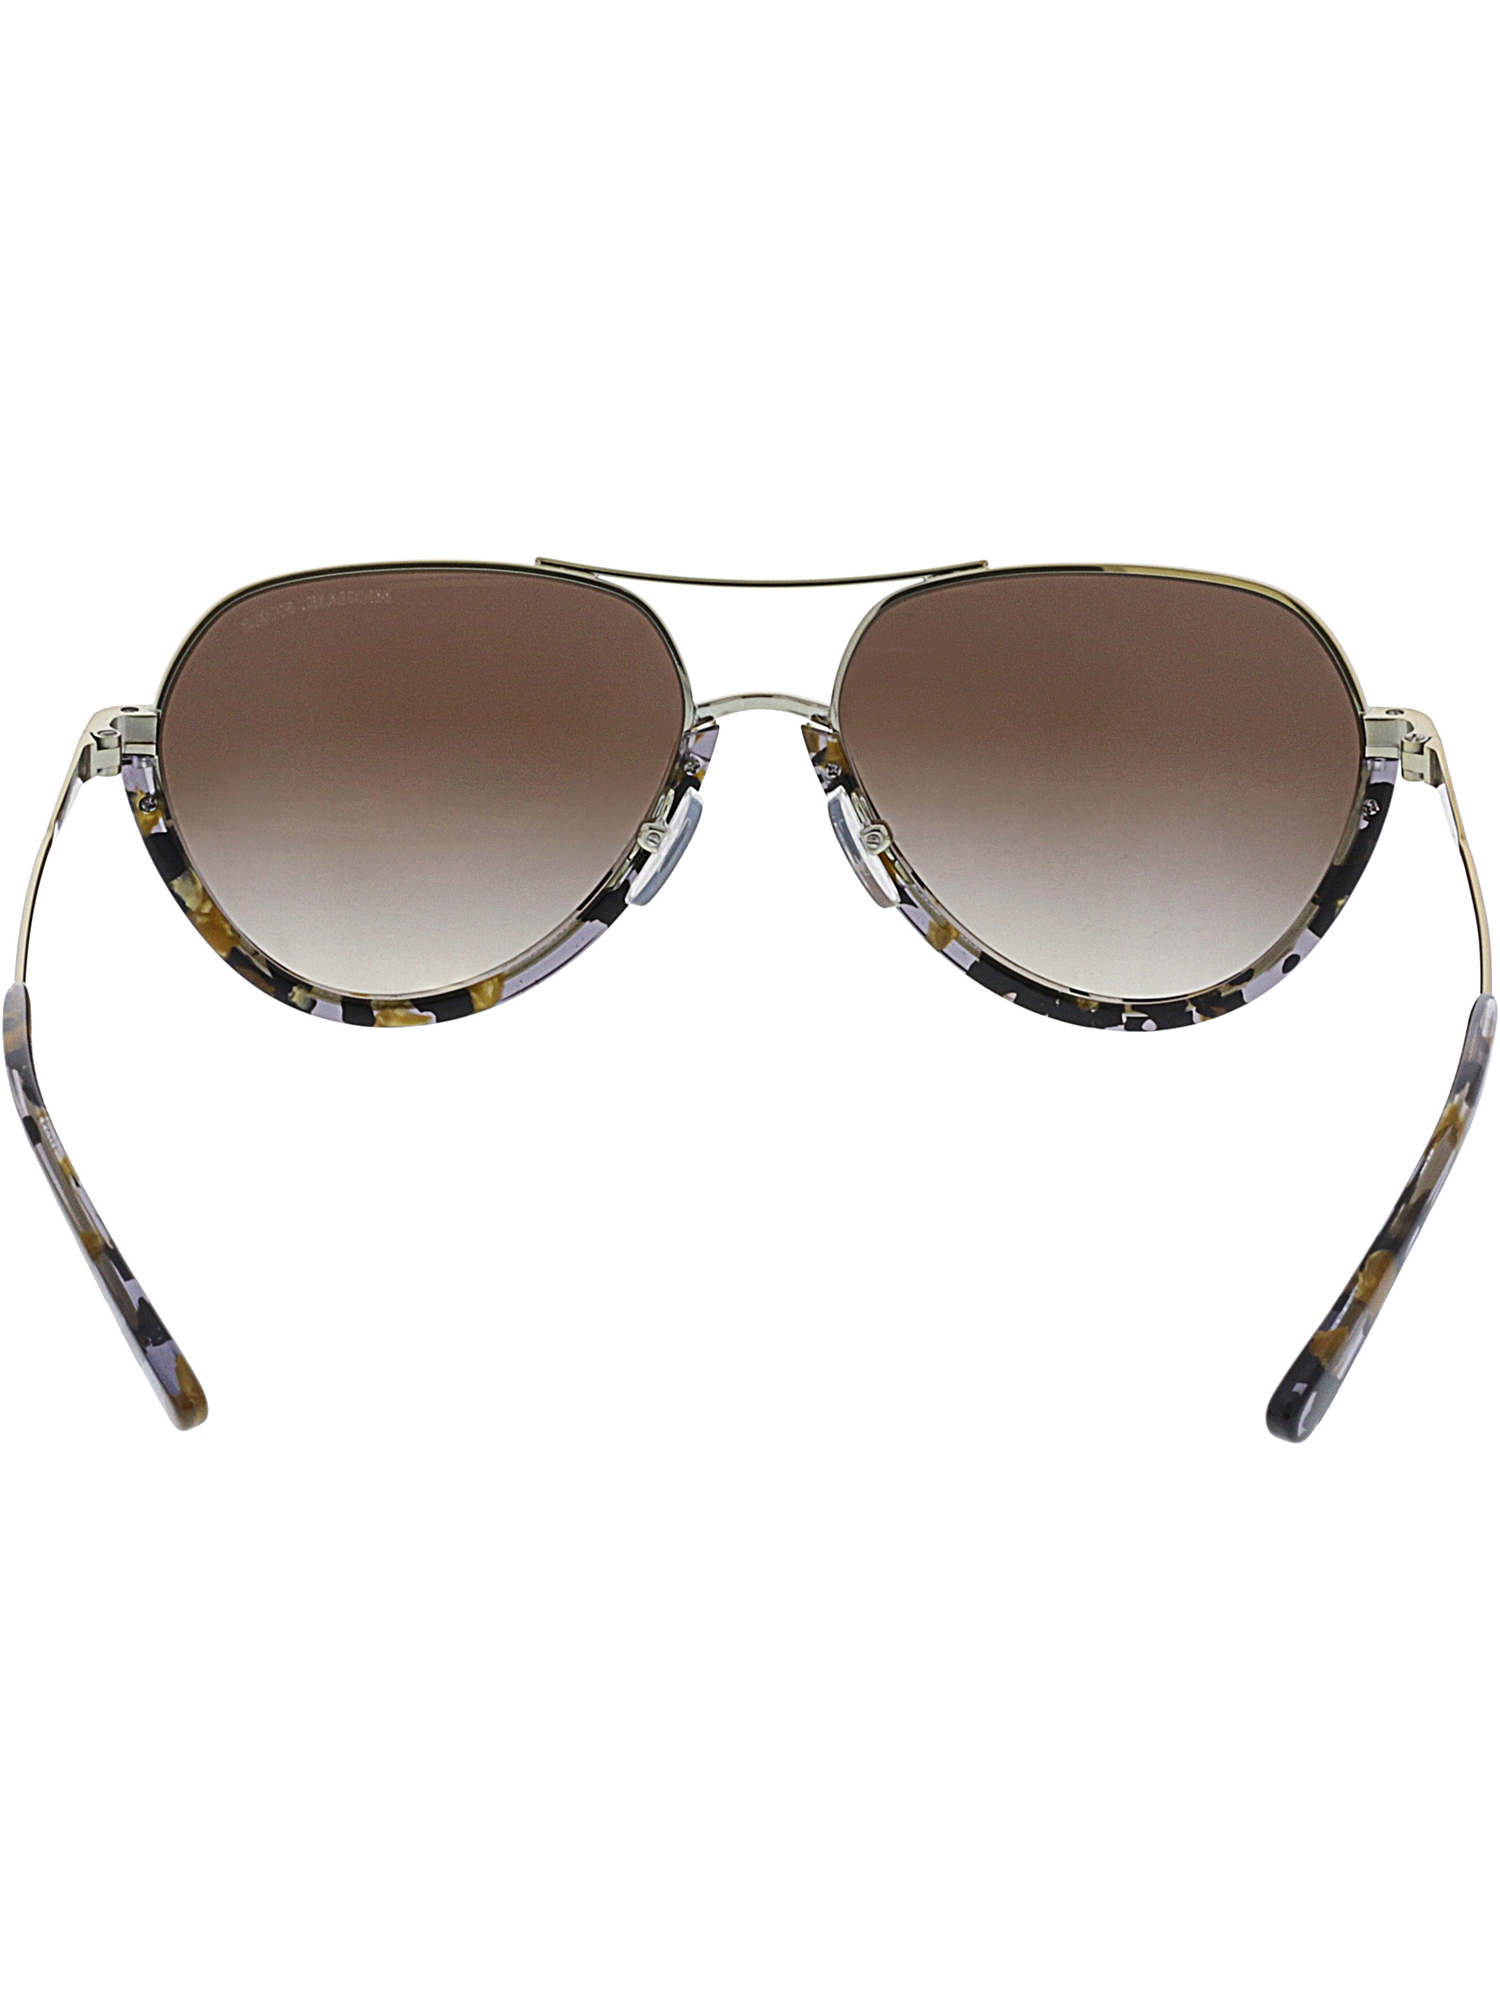 Michael Kors Smoke Gradient Aviator Ladies Sunglasses 0MK1031 102413 58 - image 3 of 3